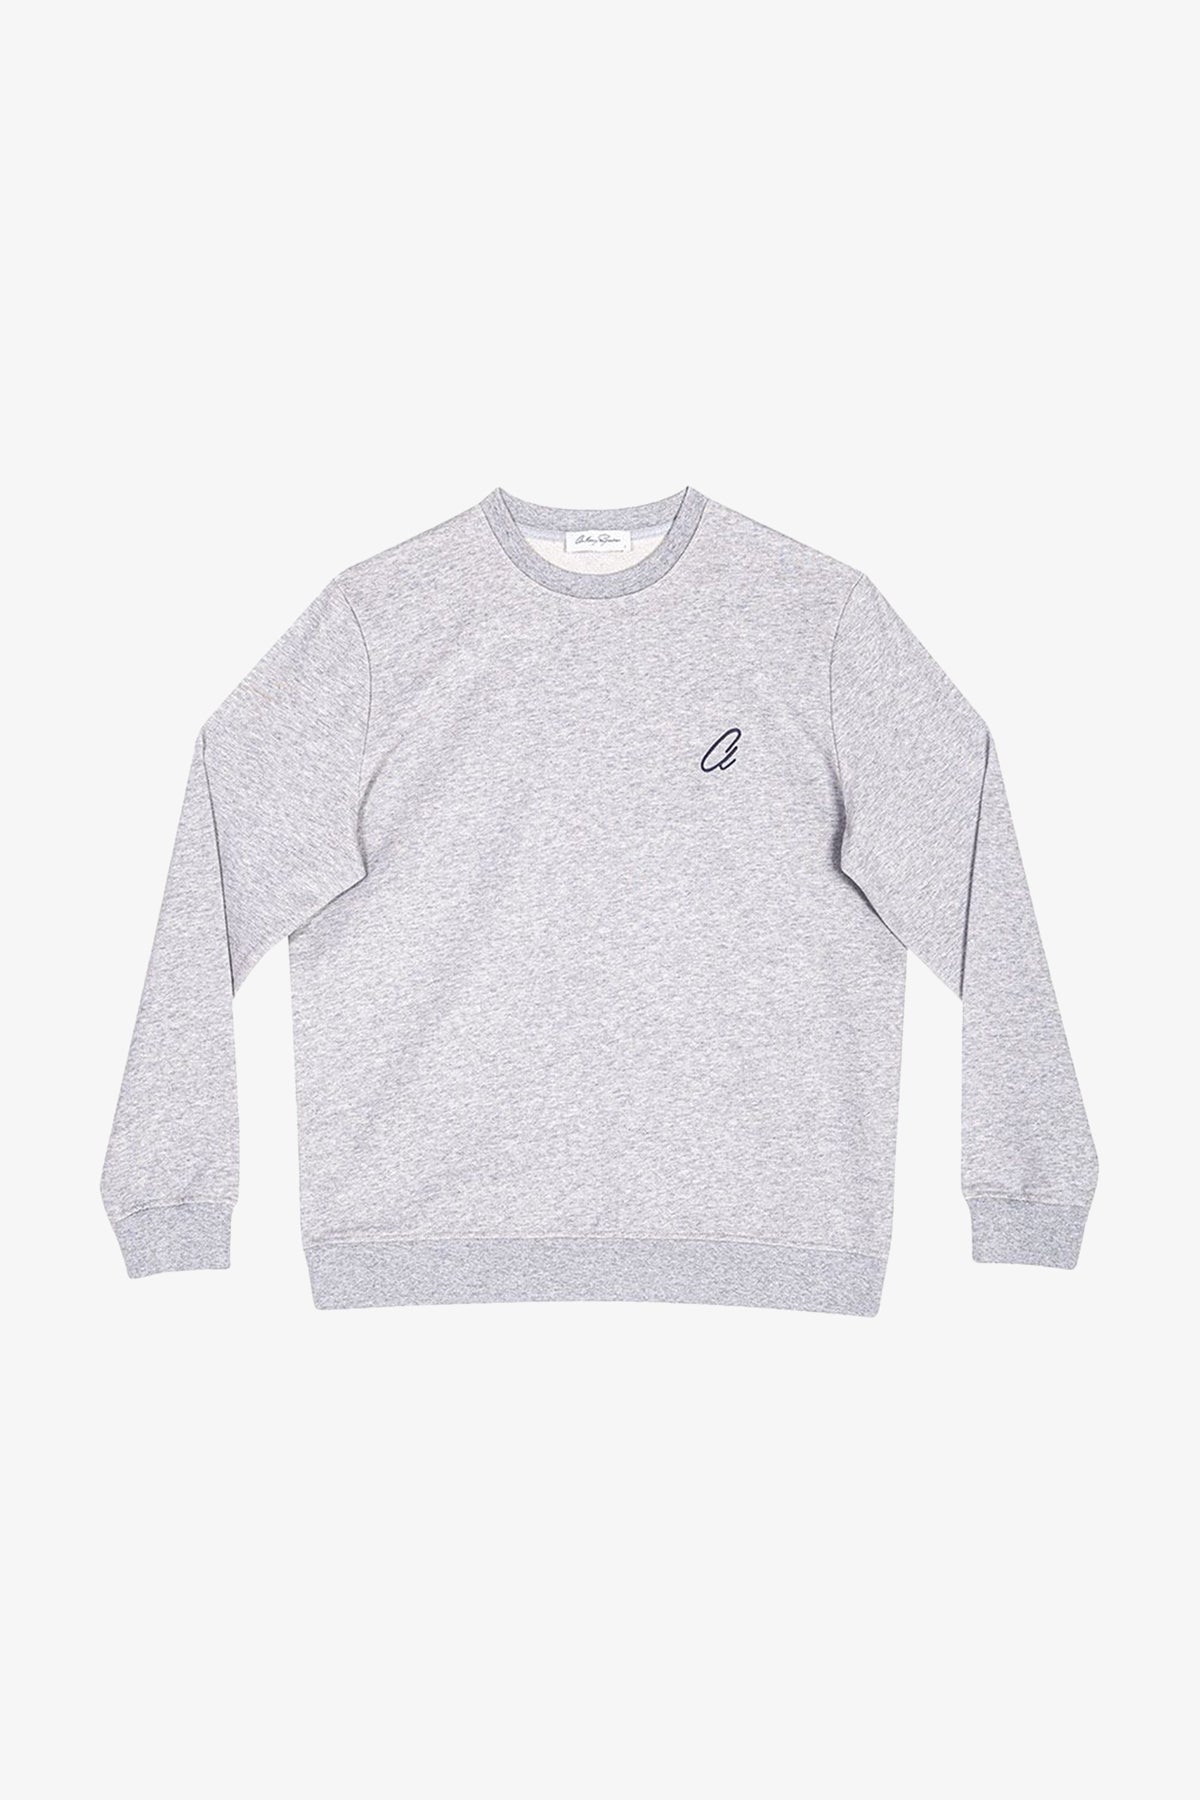 Elmer - Marle Grey Sweatshirt